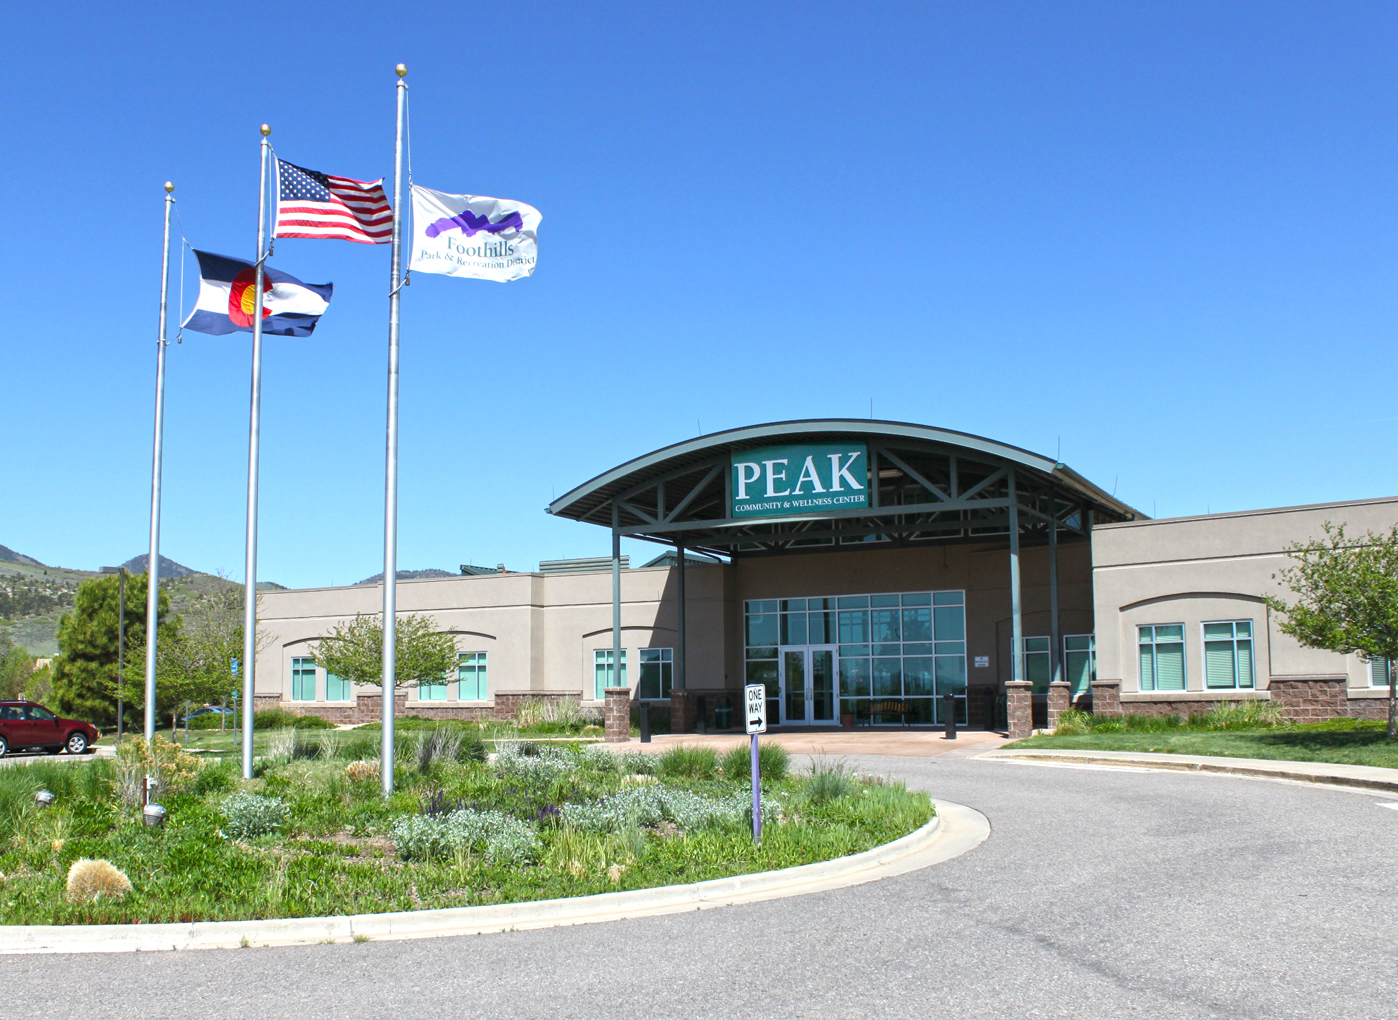 Peak Community & Wellness Center building.